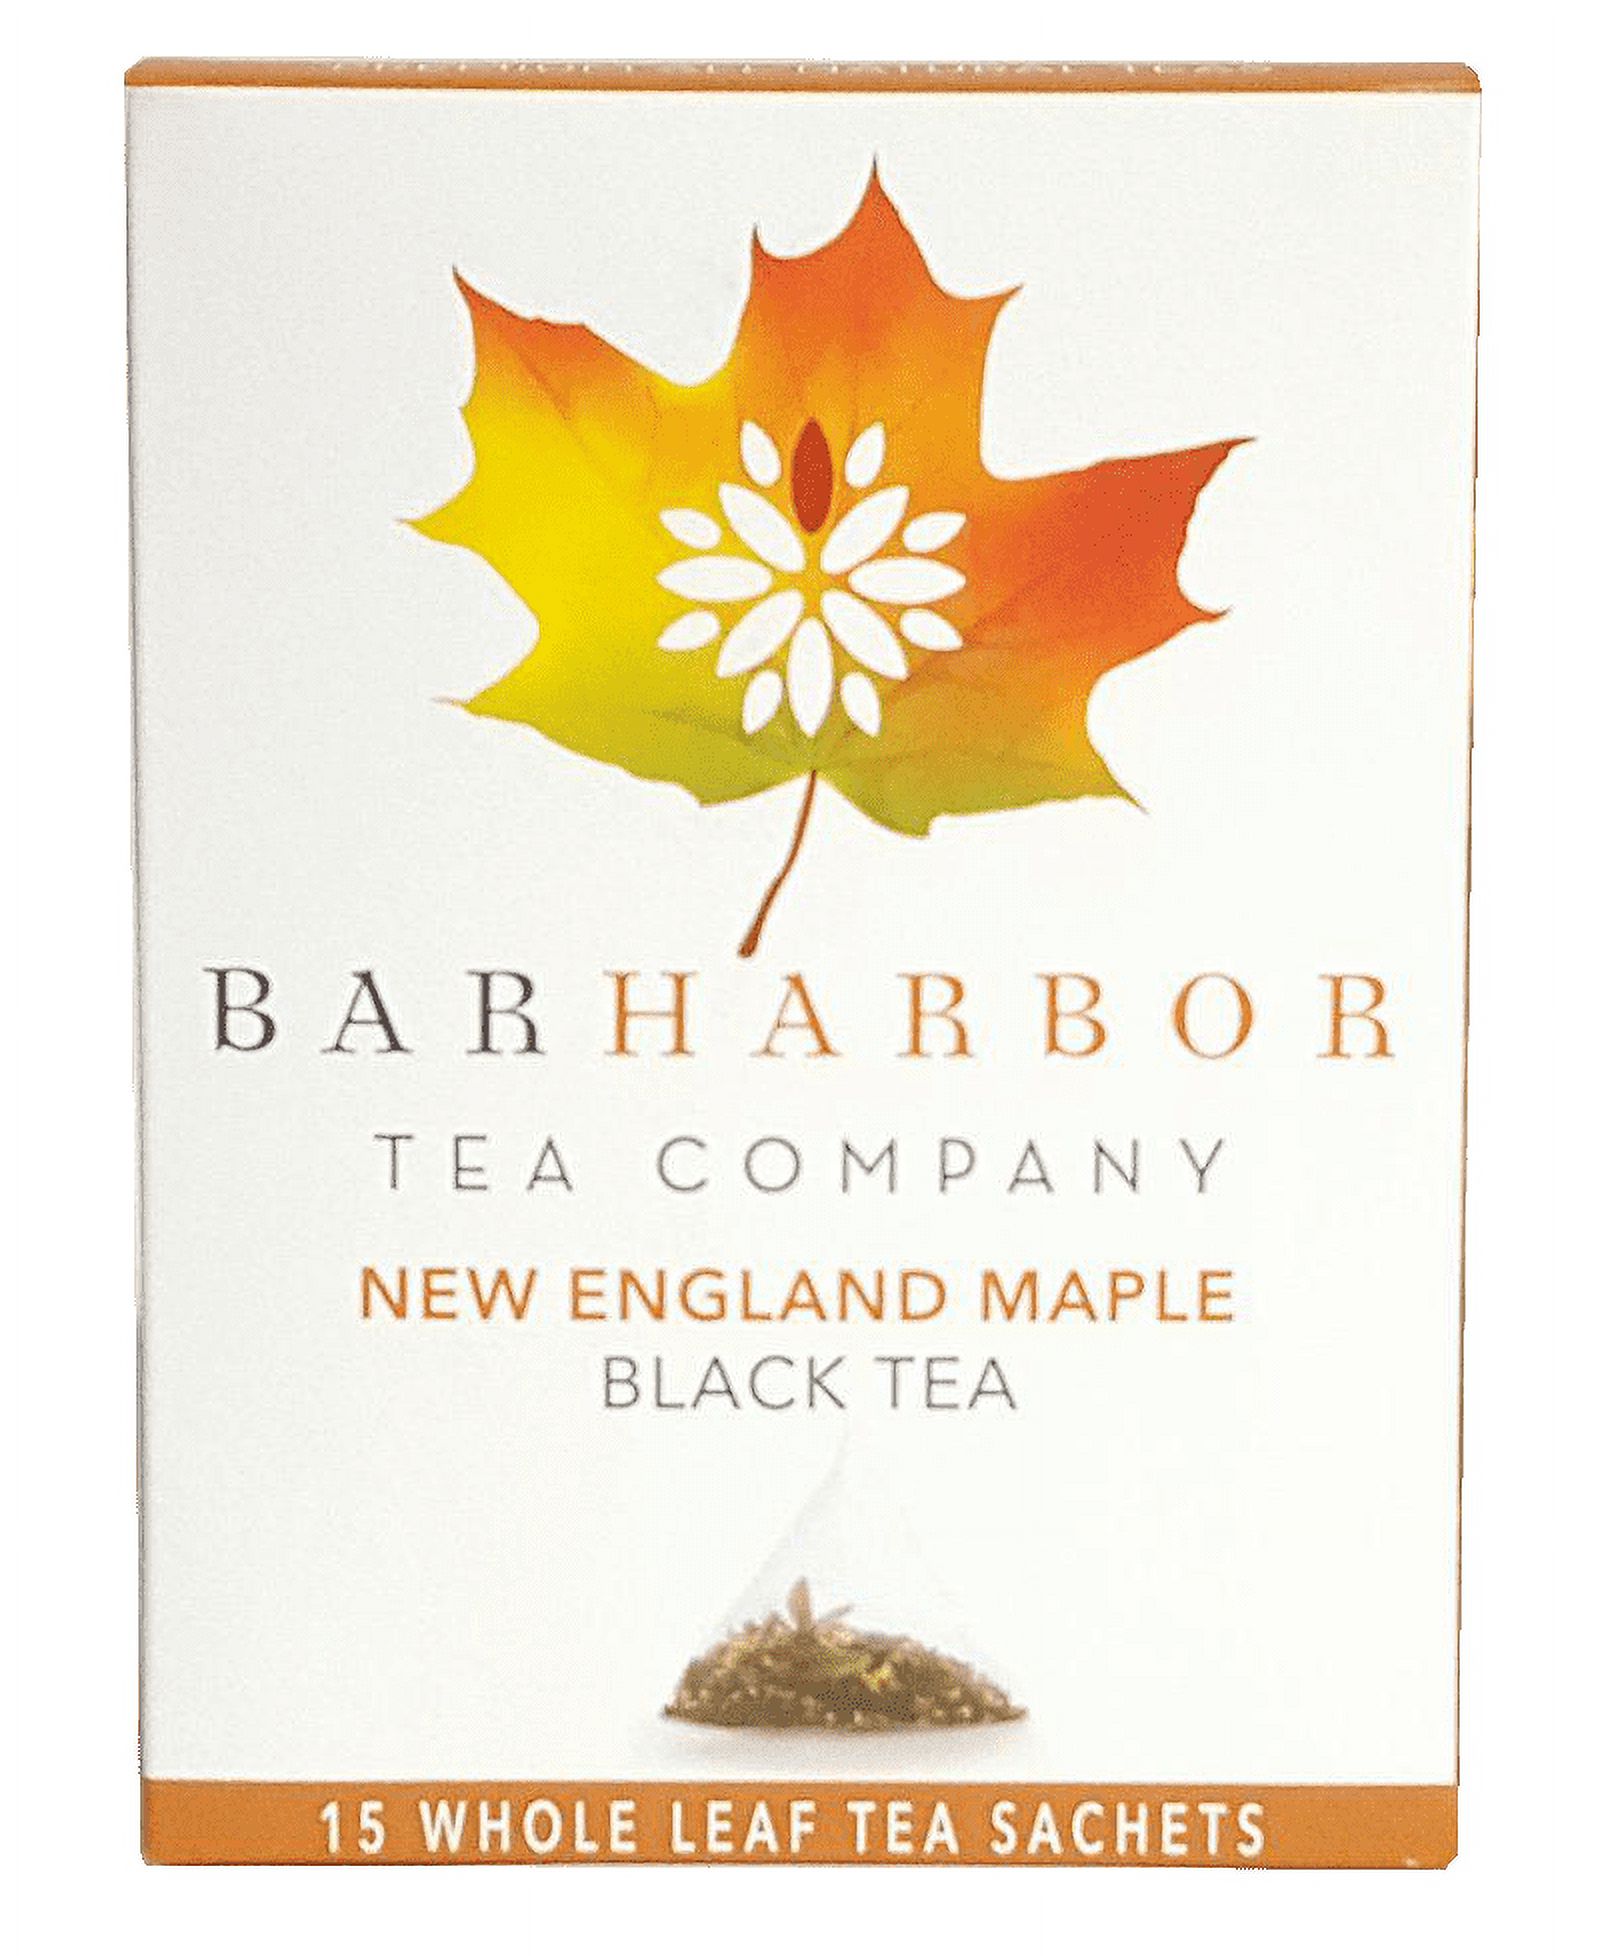 Bar Harbor Tea Company New England Maple Tea - 2 pack, 30 count, Tea bags - image 2 of 3